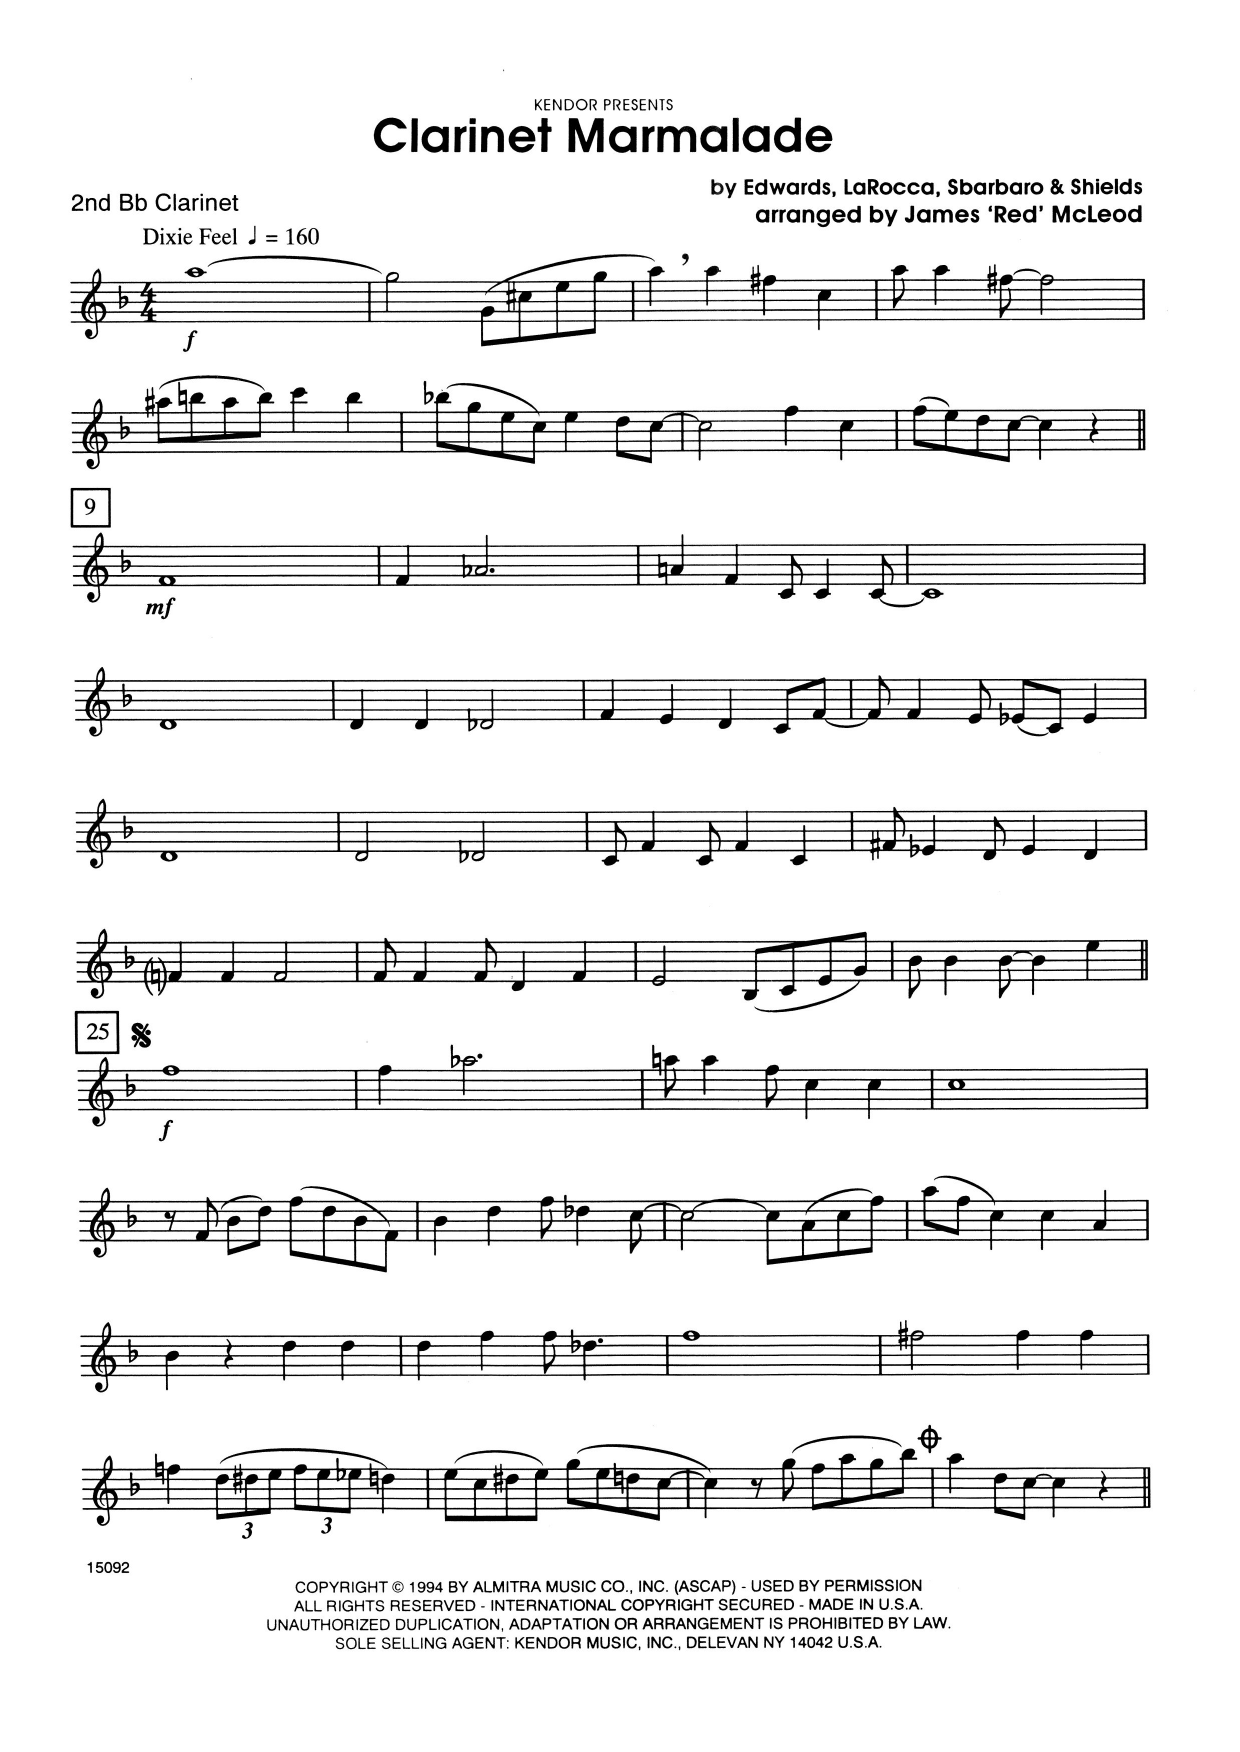 Download James 'Red' McLoud Clarinet Marmalade - 2nd Bb Clarinet Sheet Music